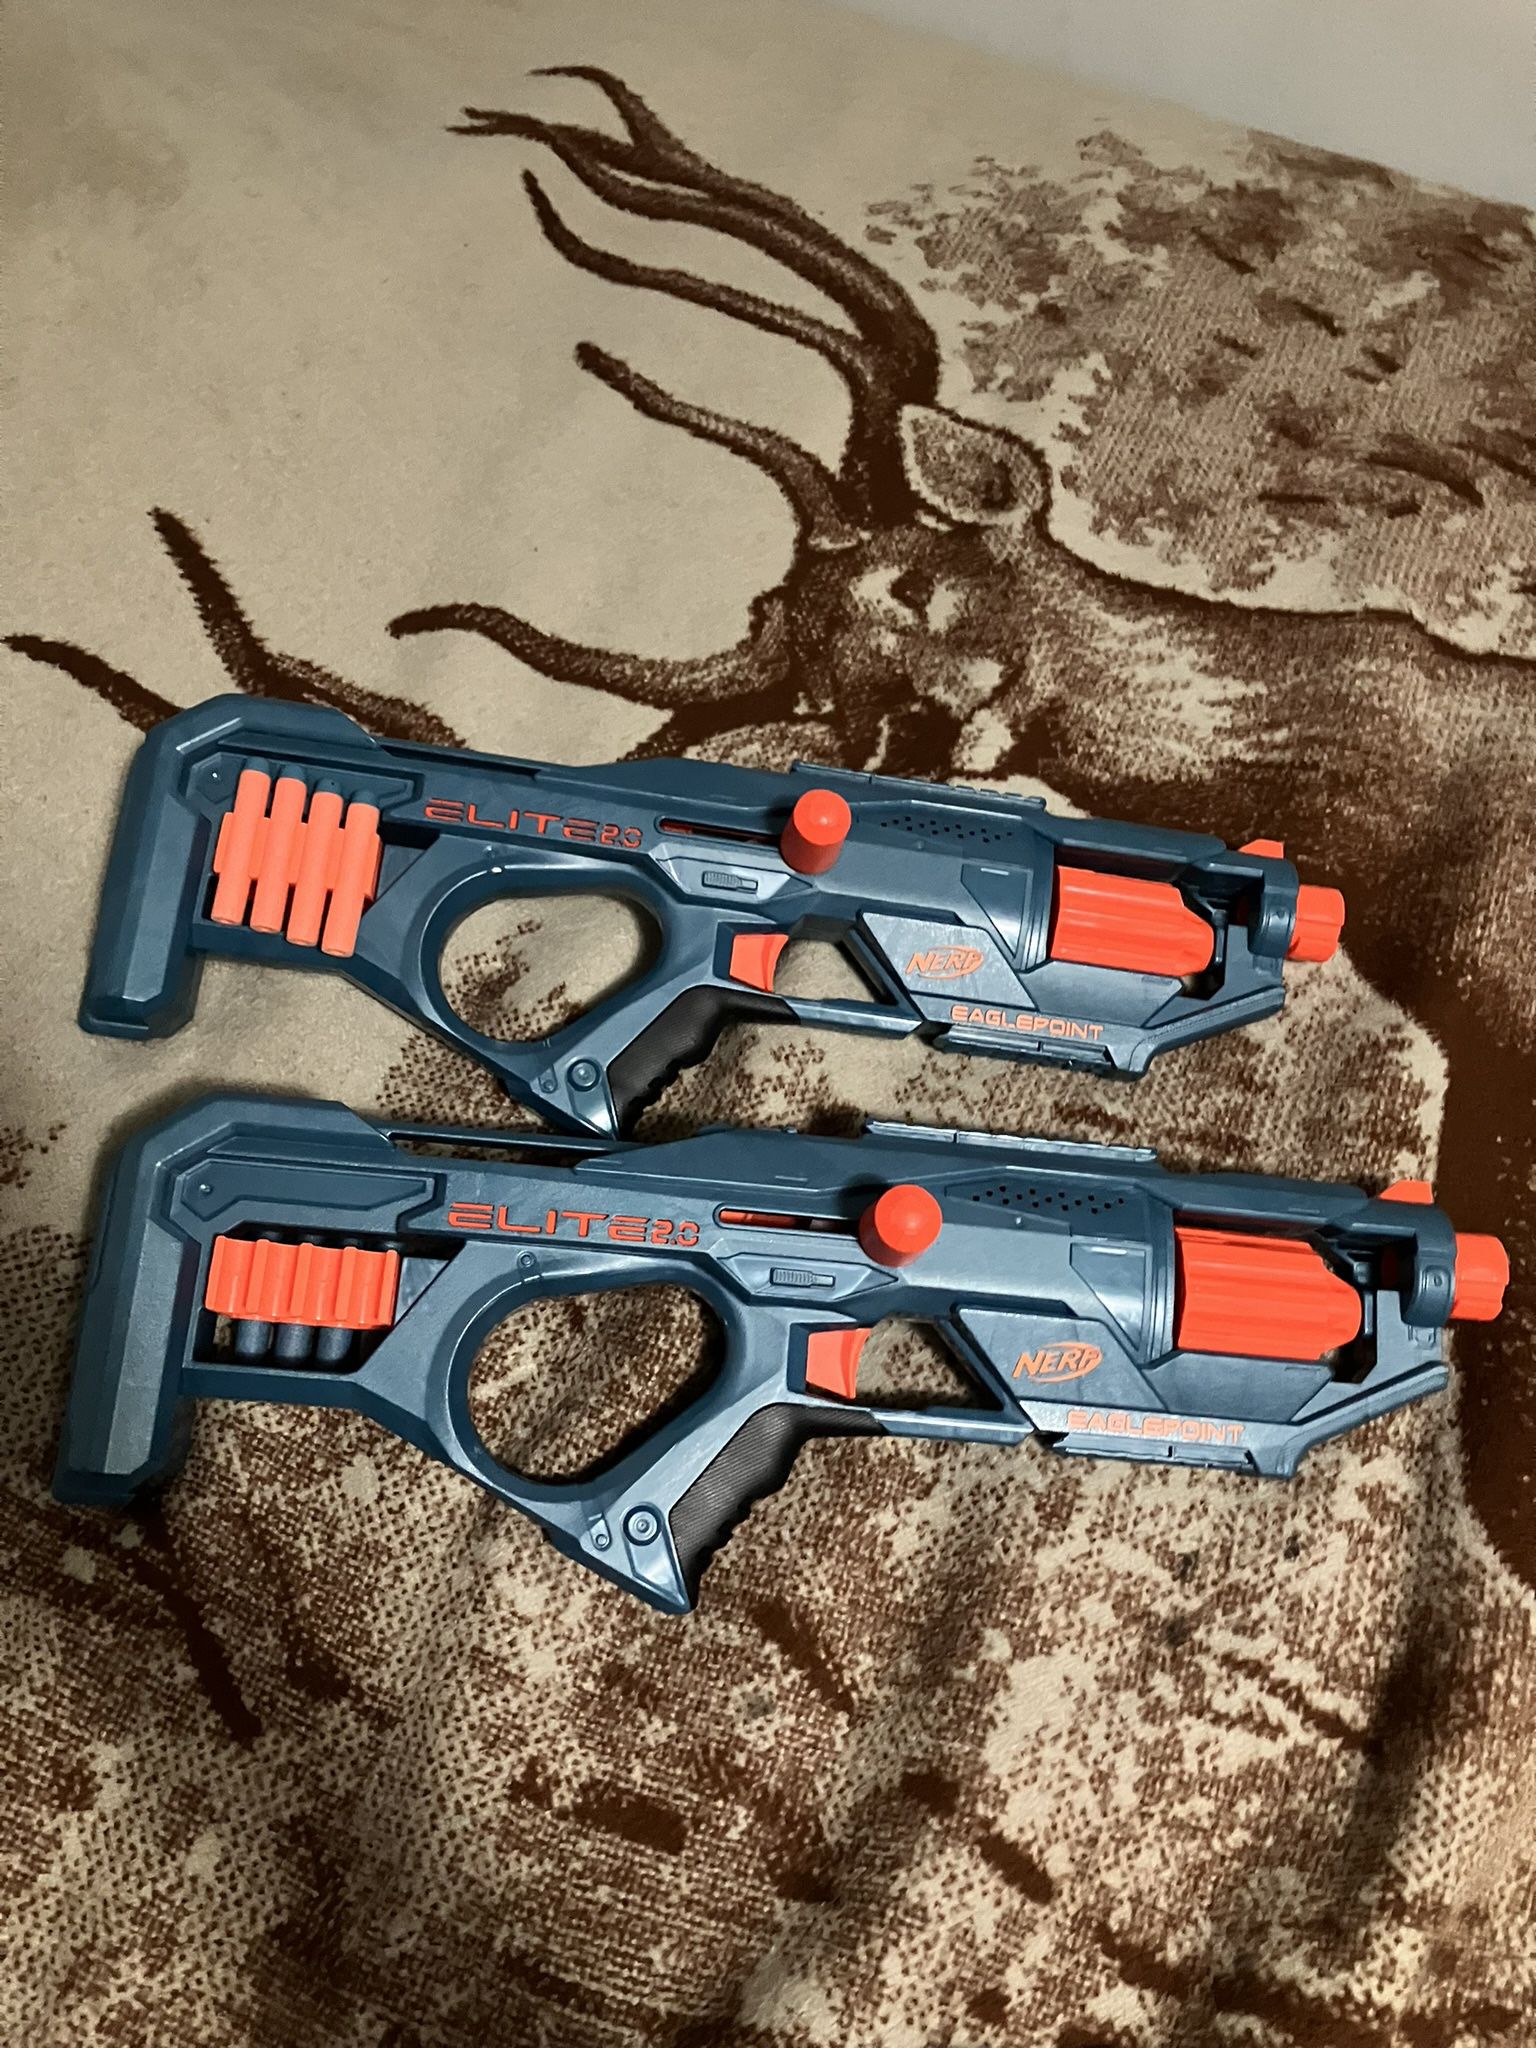 $10, 2 Nerf Elite Guns